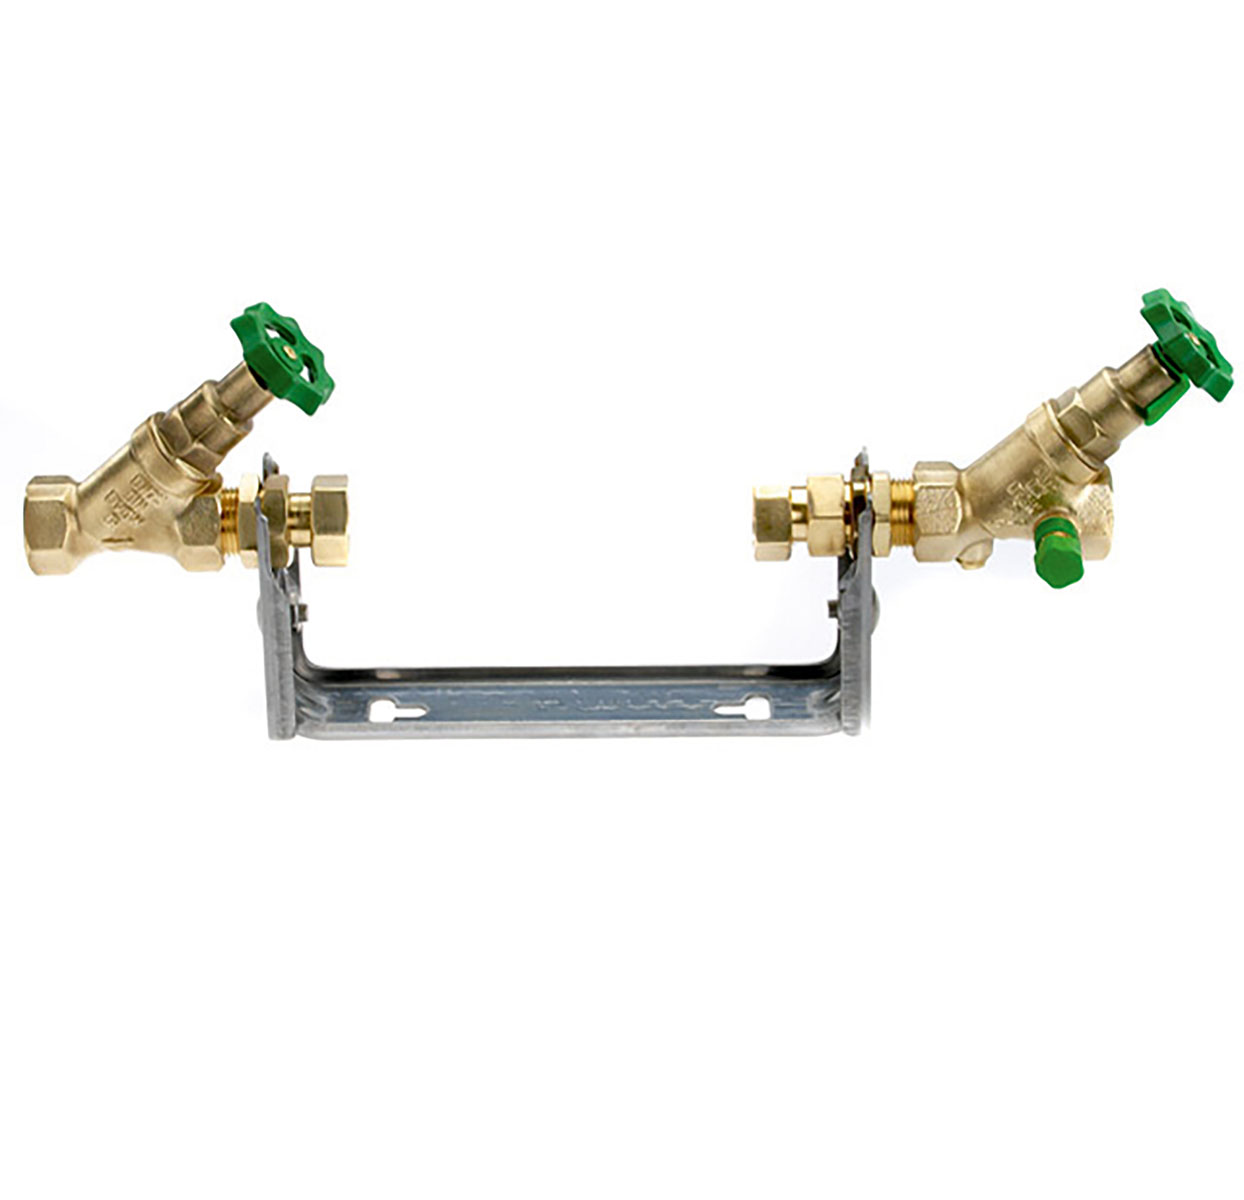 5105320 - Water meter Connection kit bracket adjustable, horizontal installation